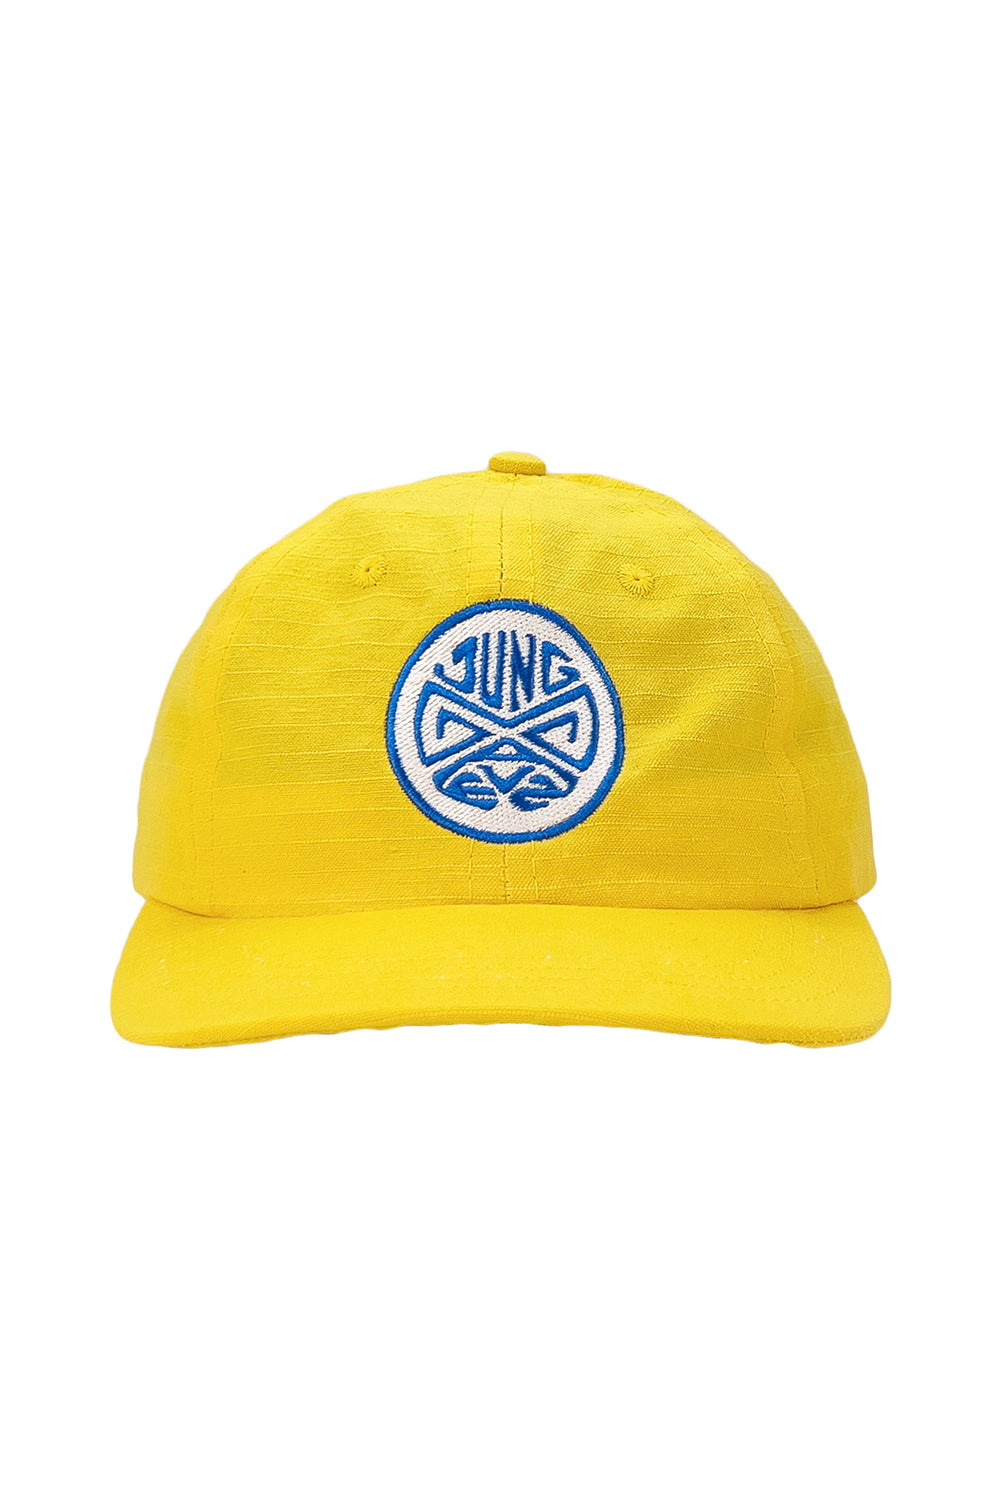 Third Eye Ripstop Cap | Jungmaven Hemp Clothing & Accessories / Color: Sunshine Yellow